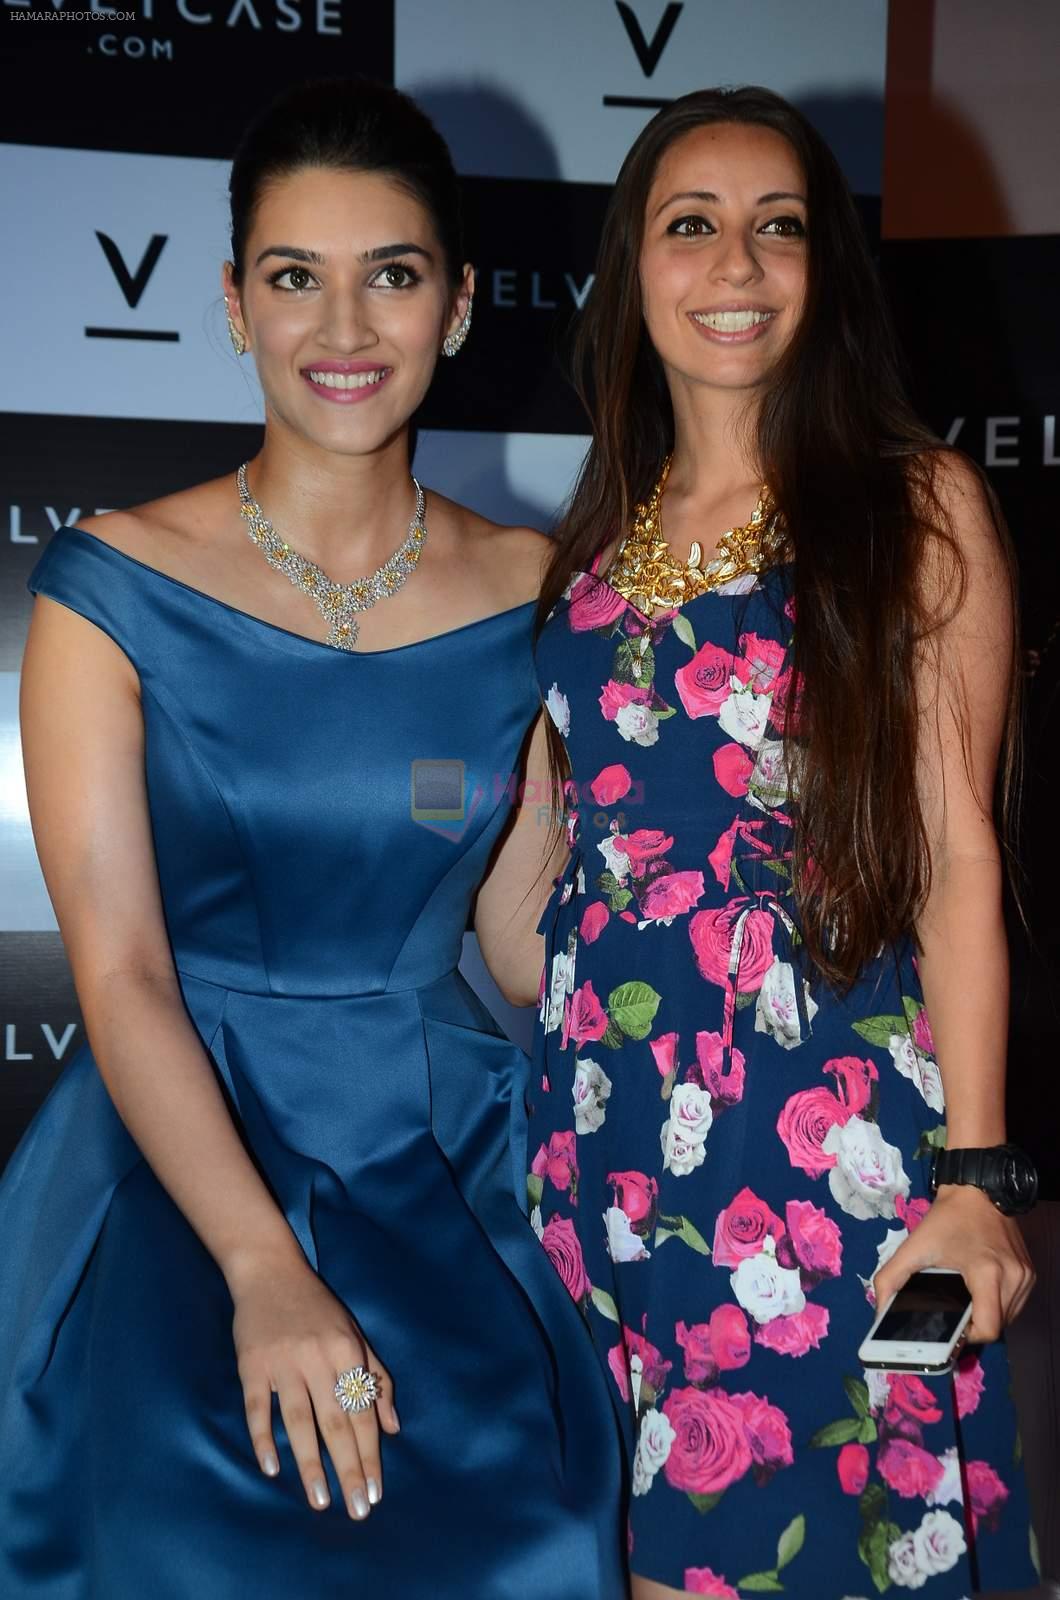 Kriti Sanon at VelvetCase.com launch in Mumbai on 28th July 2015